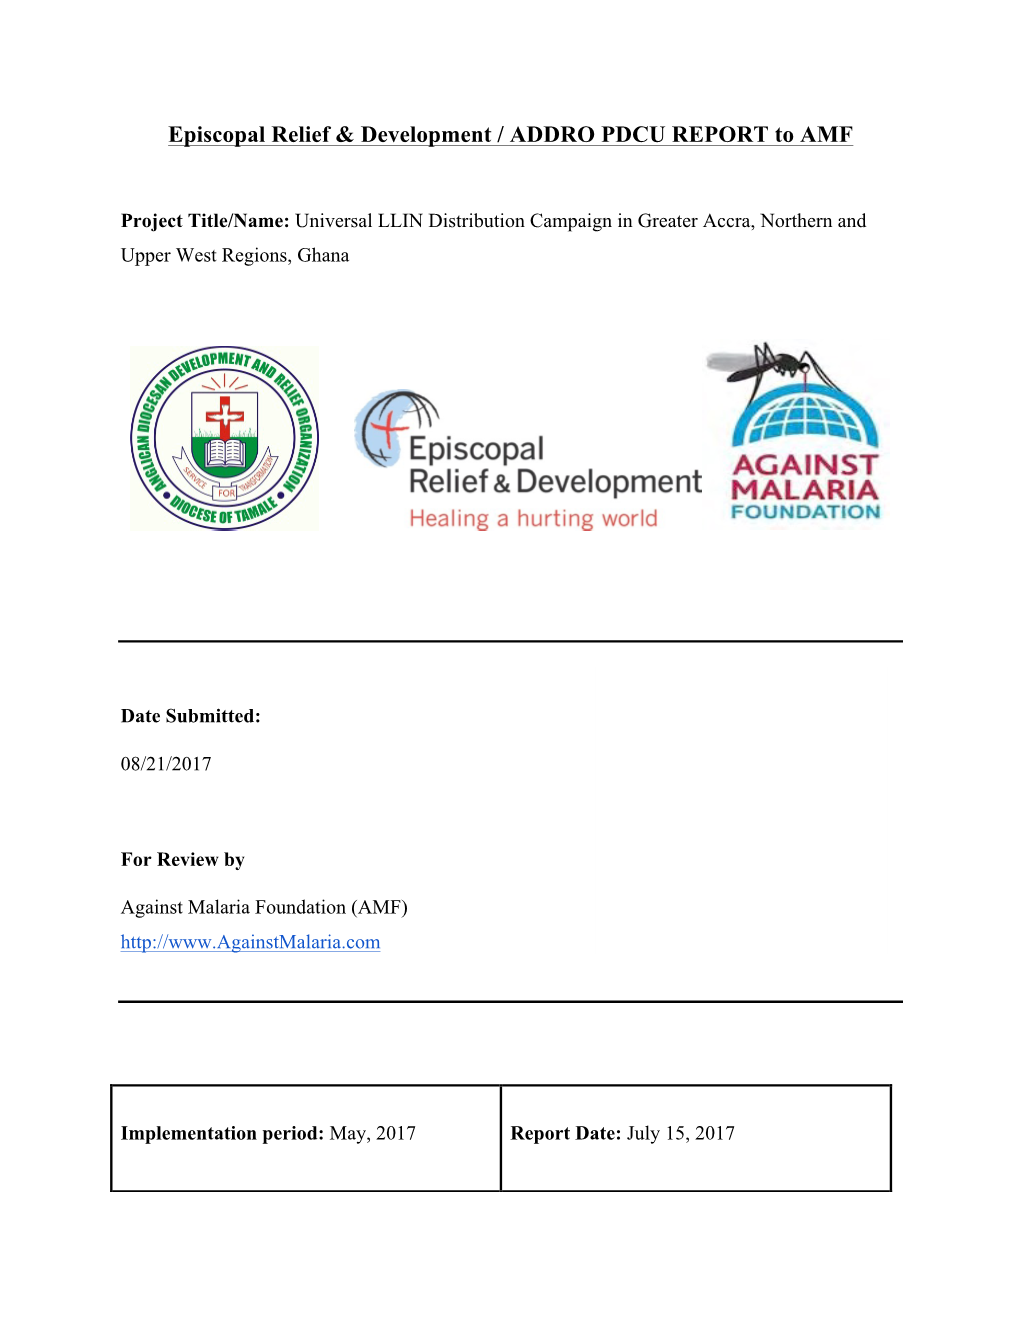 Episcopal Relief & Development / ADDRO PDCU REPORT To